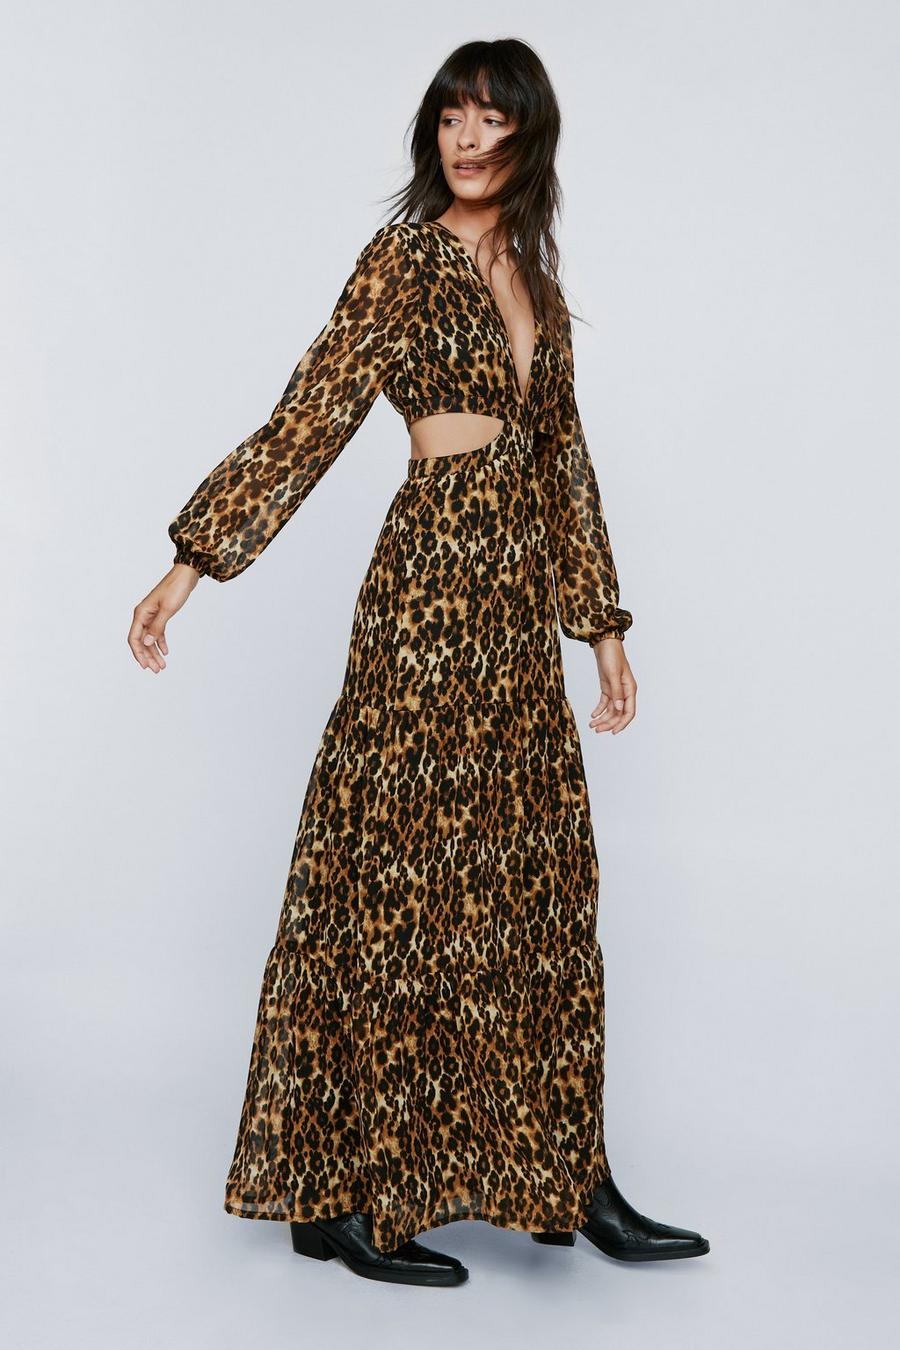 Chiffon Leopard Cut Out Maxi Dress